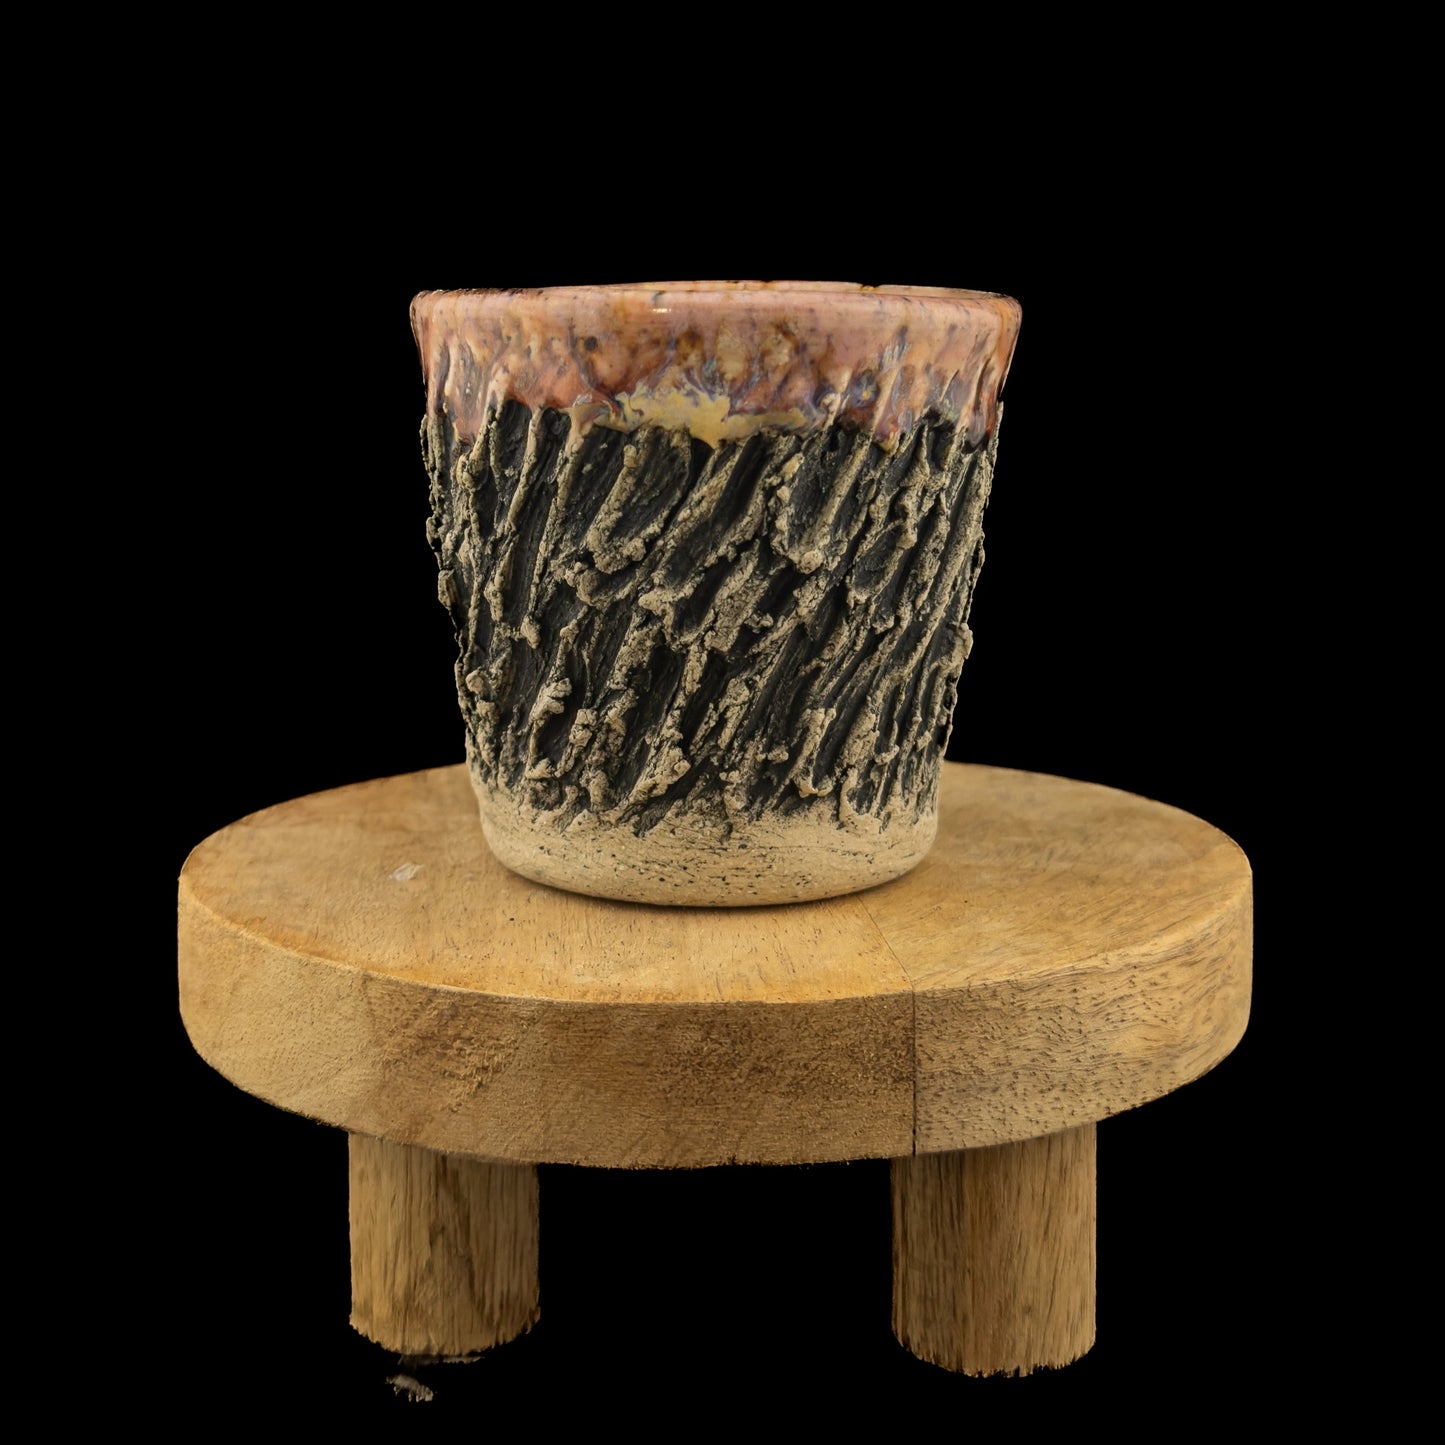 Textured Coffee Mug #031